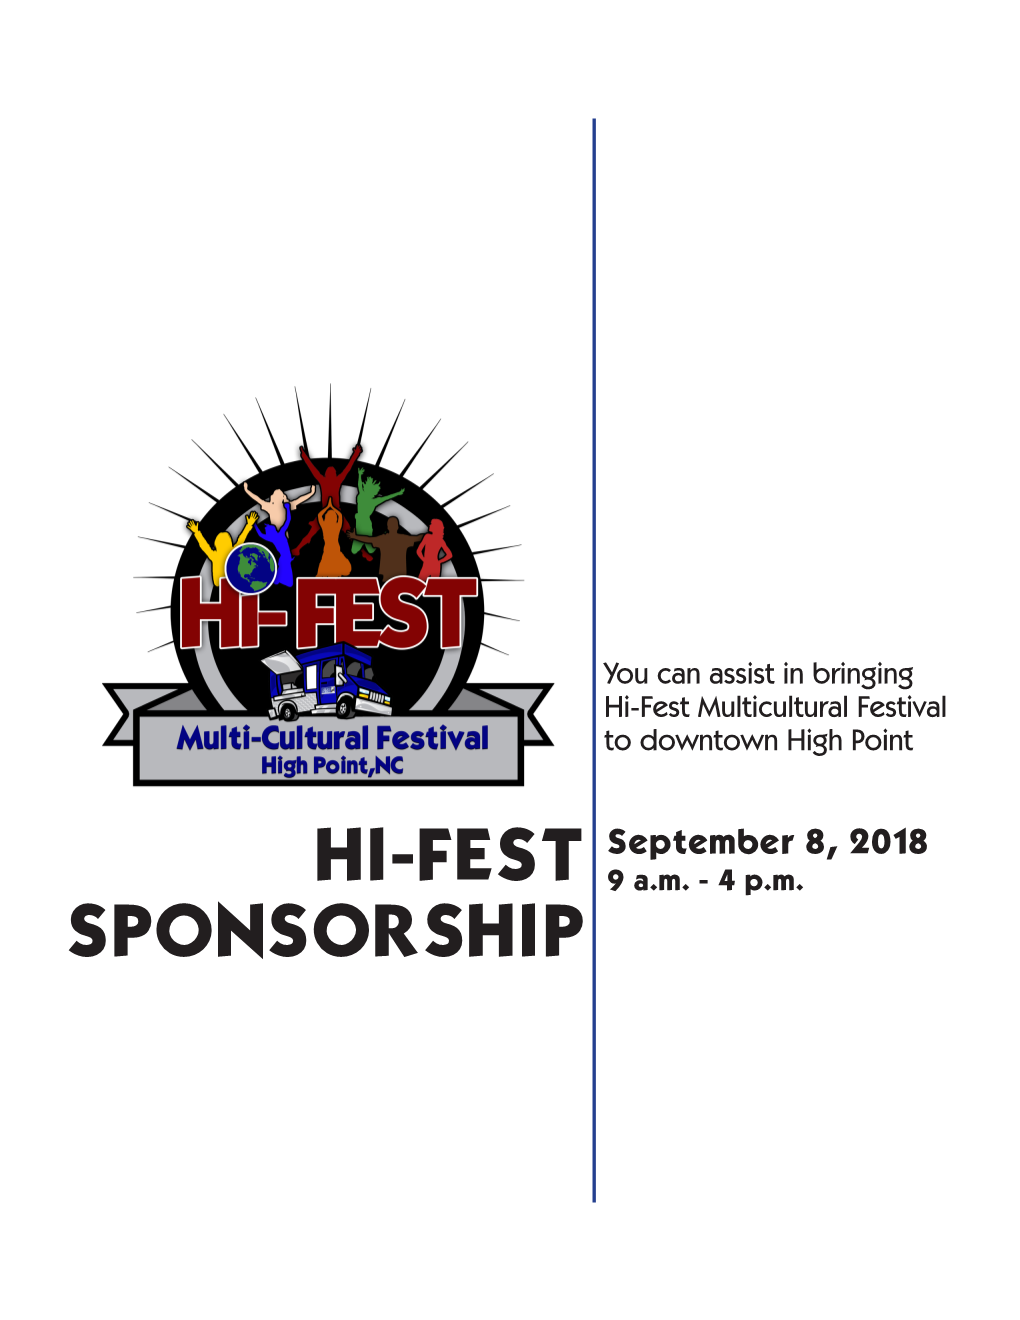 Hi-Fest Sponsorship